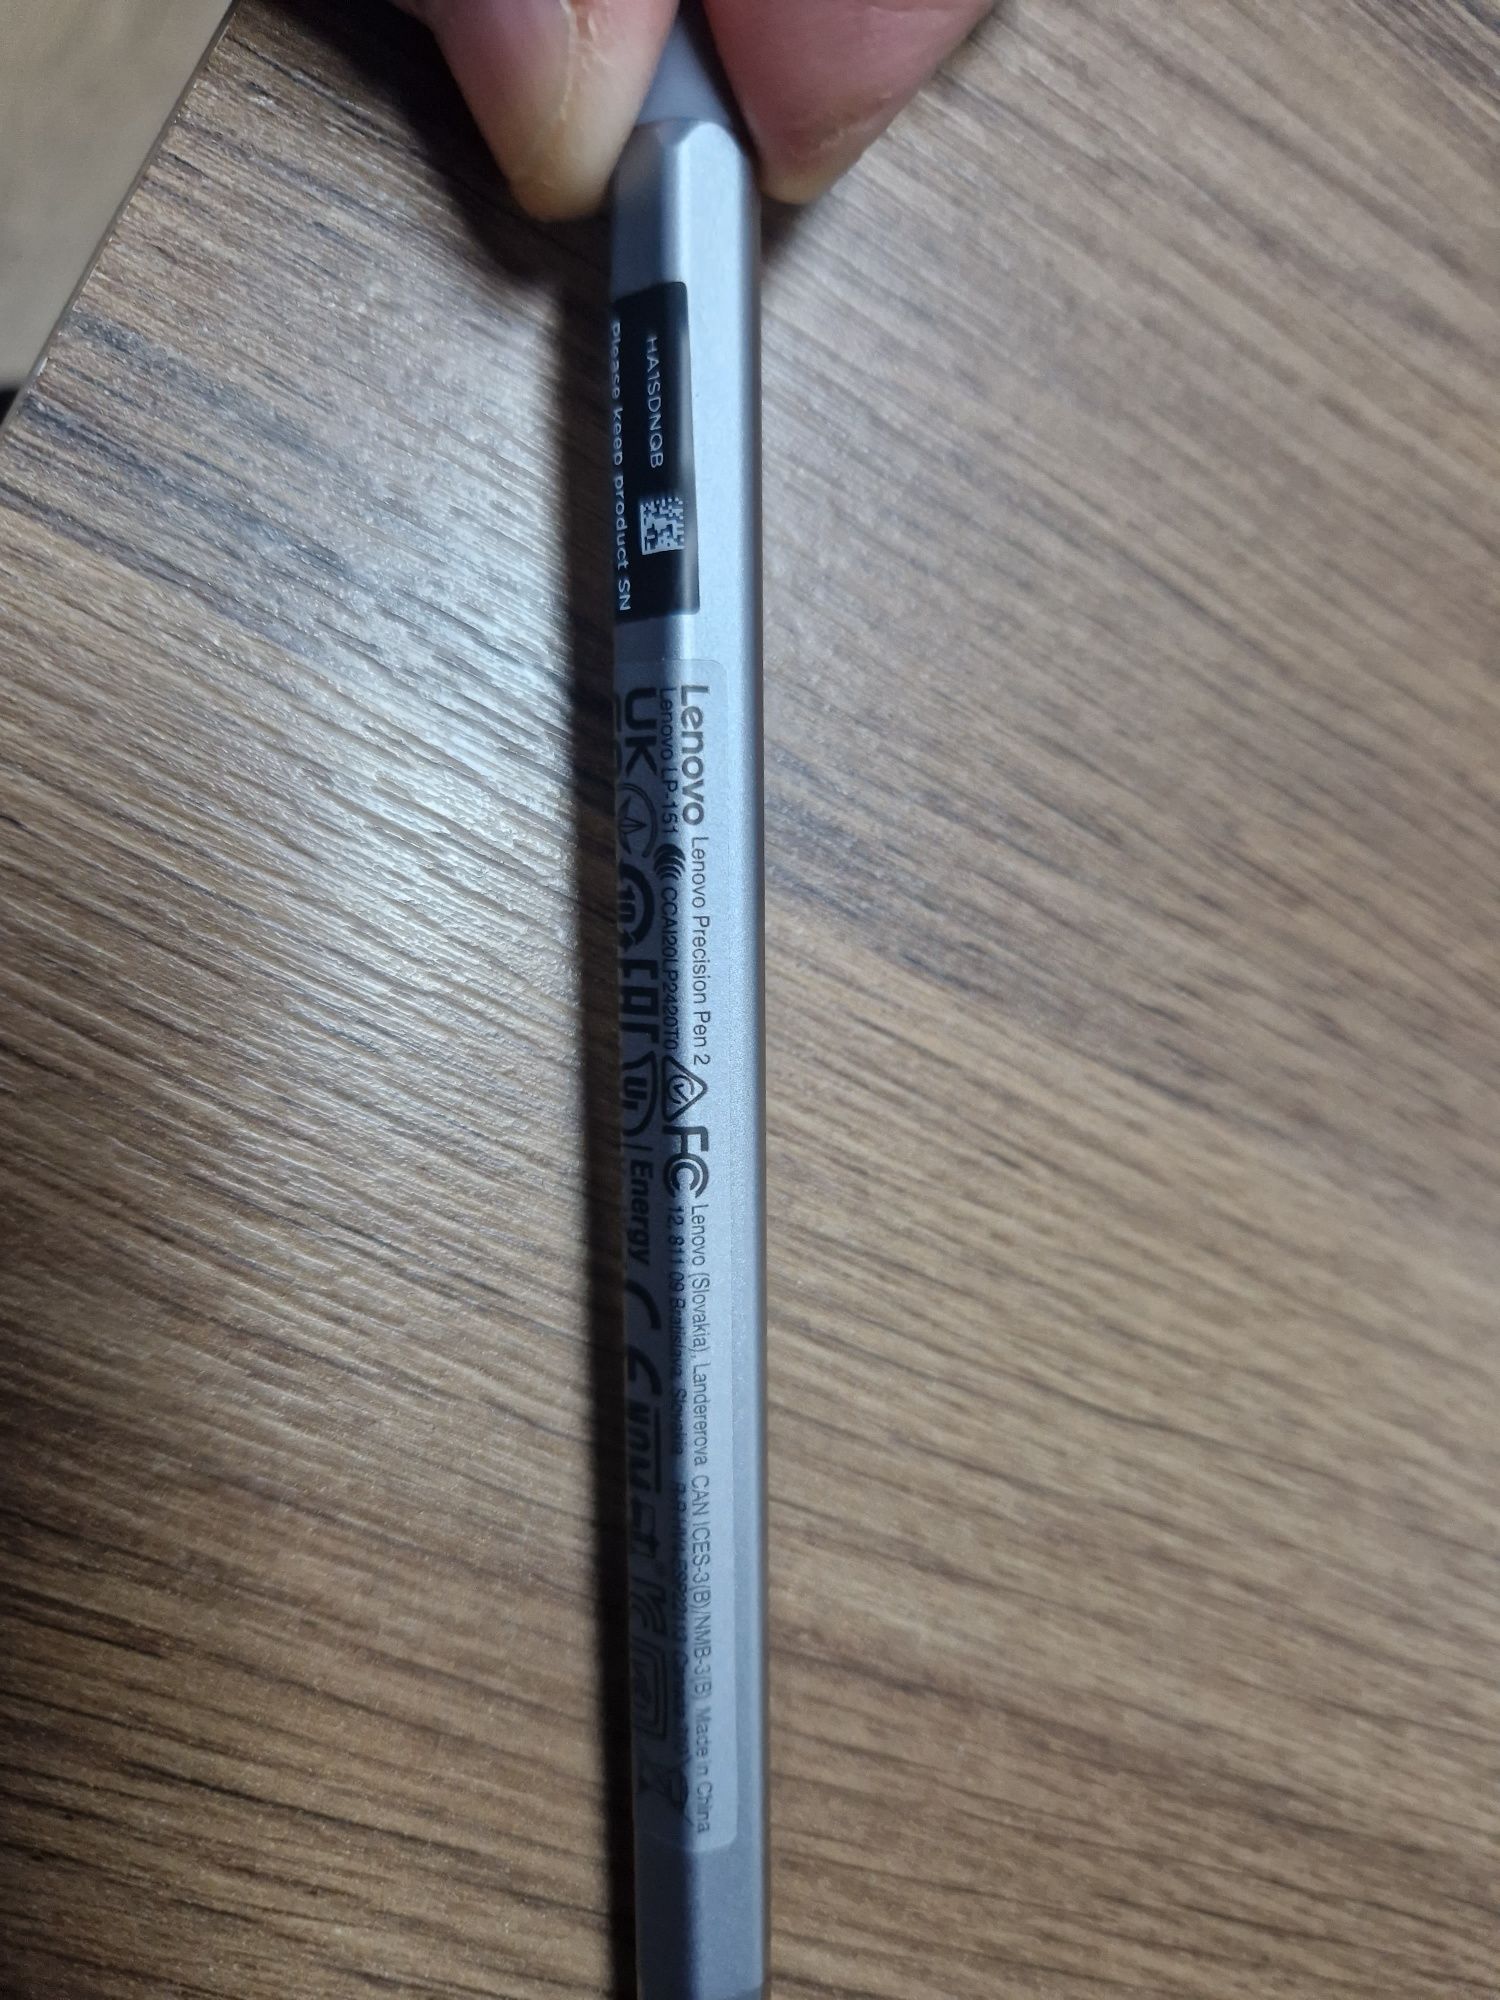 Vând lenovo precision pen 2 pt tableta